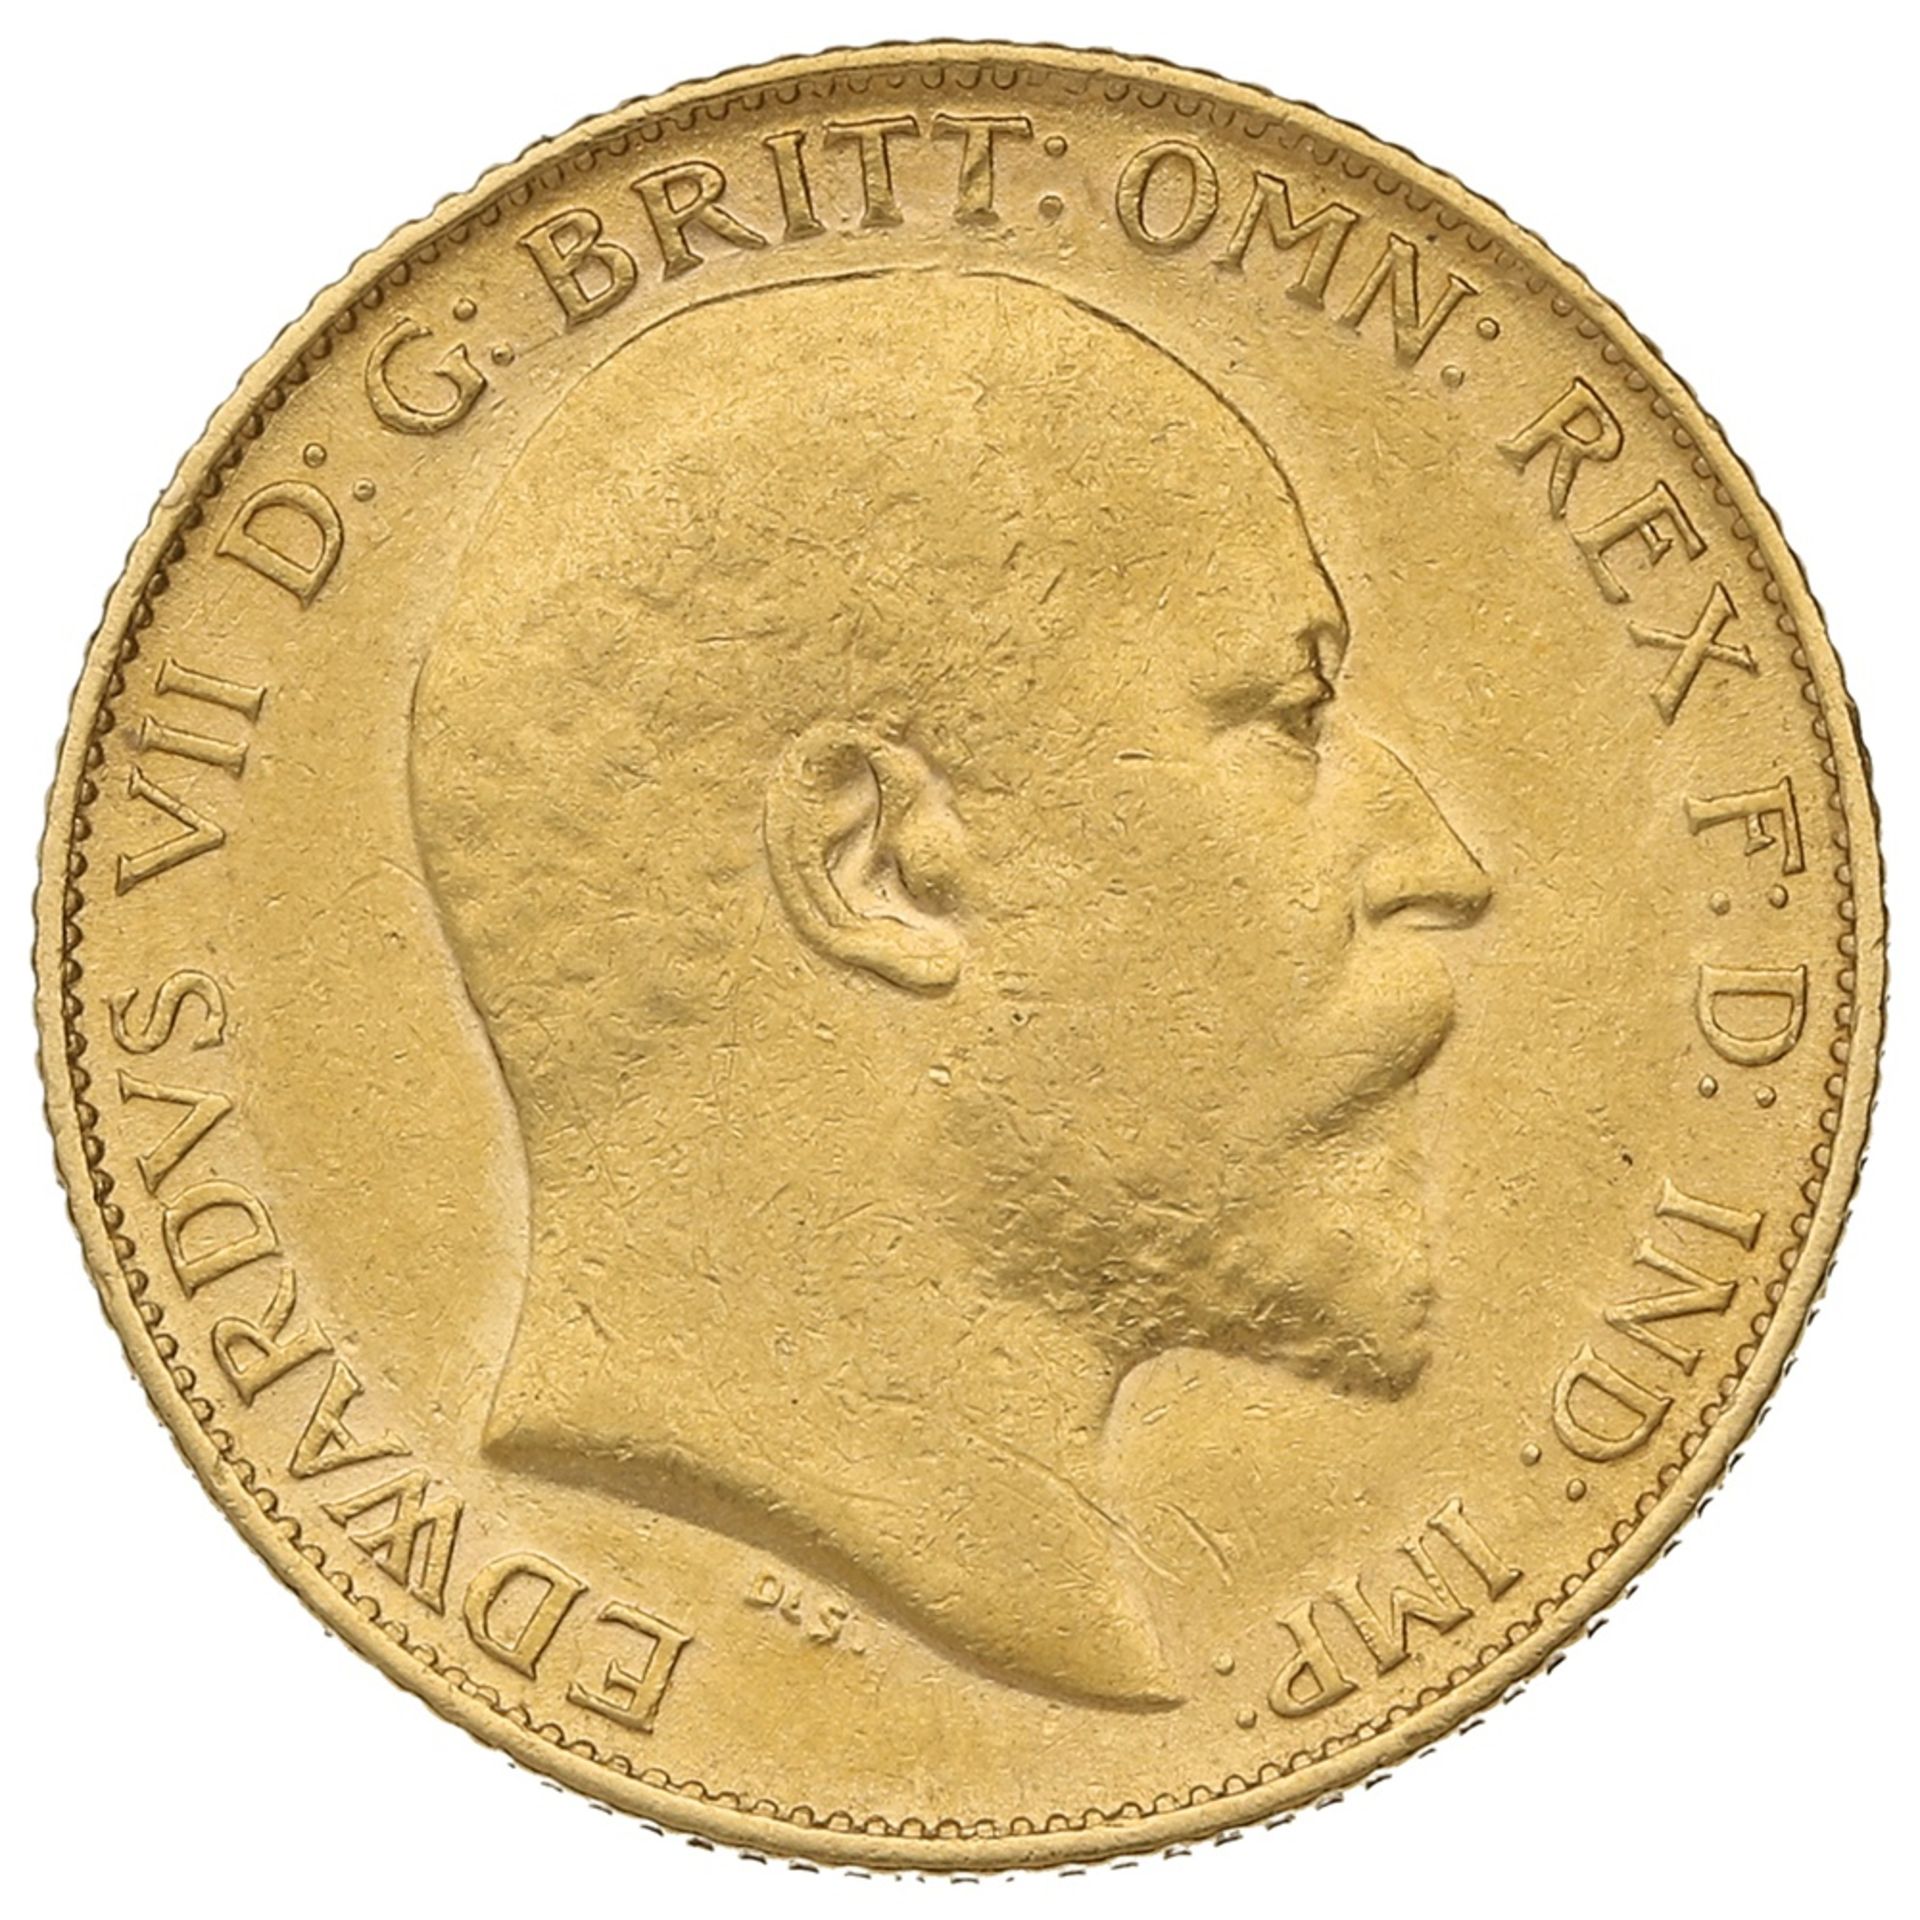 1903 - King Edward VII - Half Sovereign - Image 2 of 2